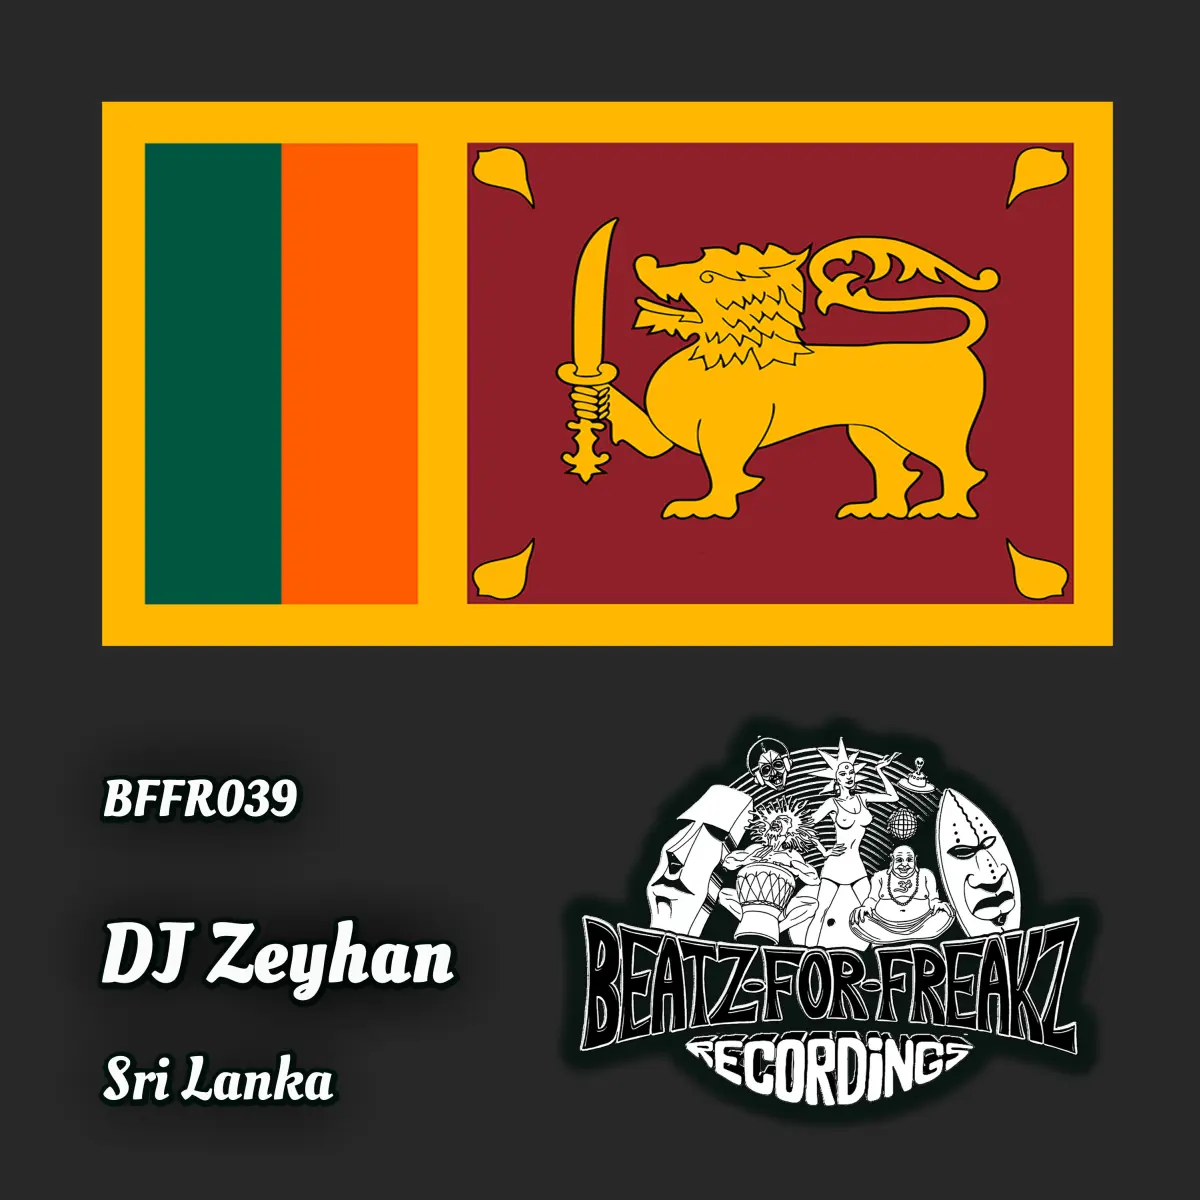 BFFR039 - DJ Zeyhan - Sri Lanka